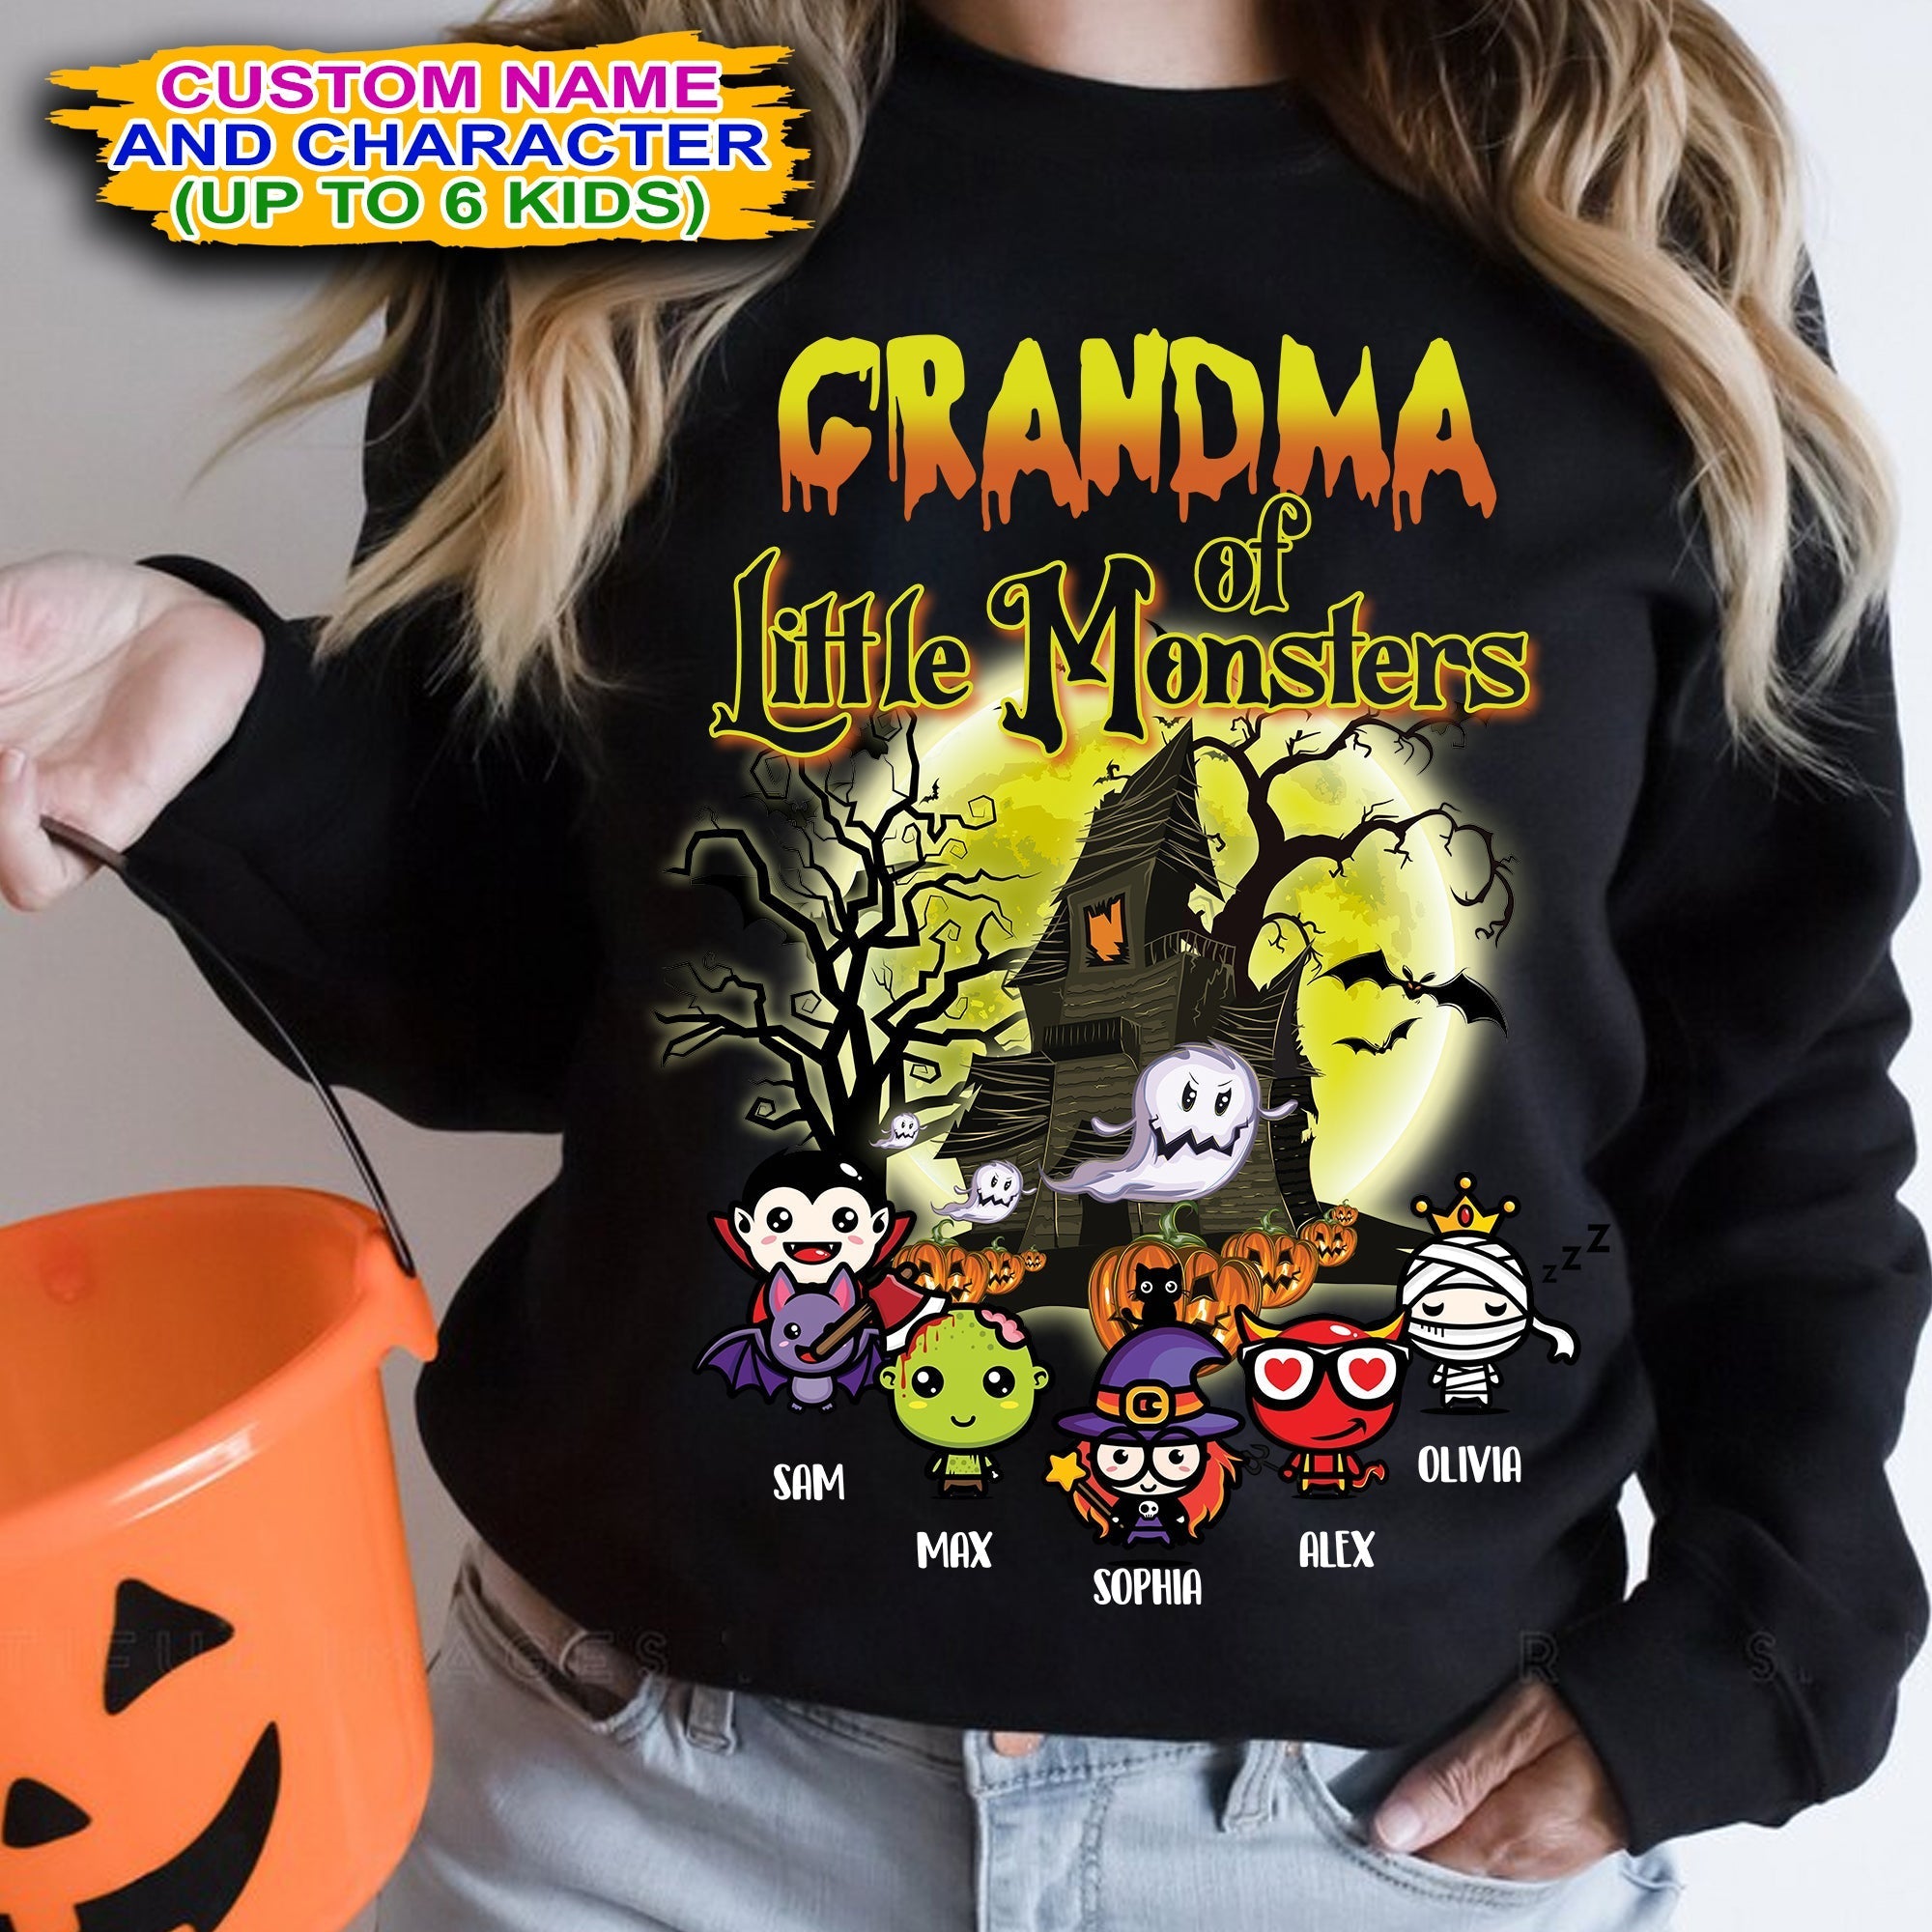 Grandma Of Little Monsters - Custom Characters And Name - Personalized Sweatshirt - Halloween Family Gift